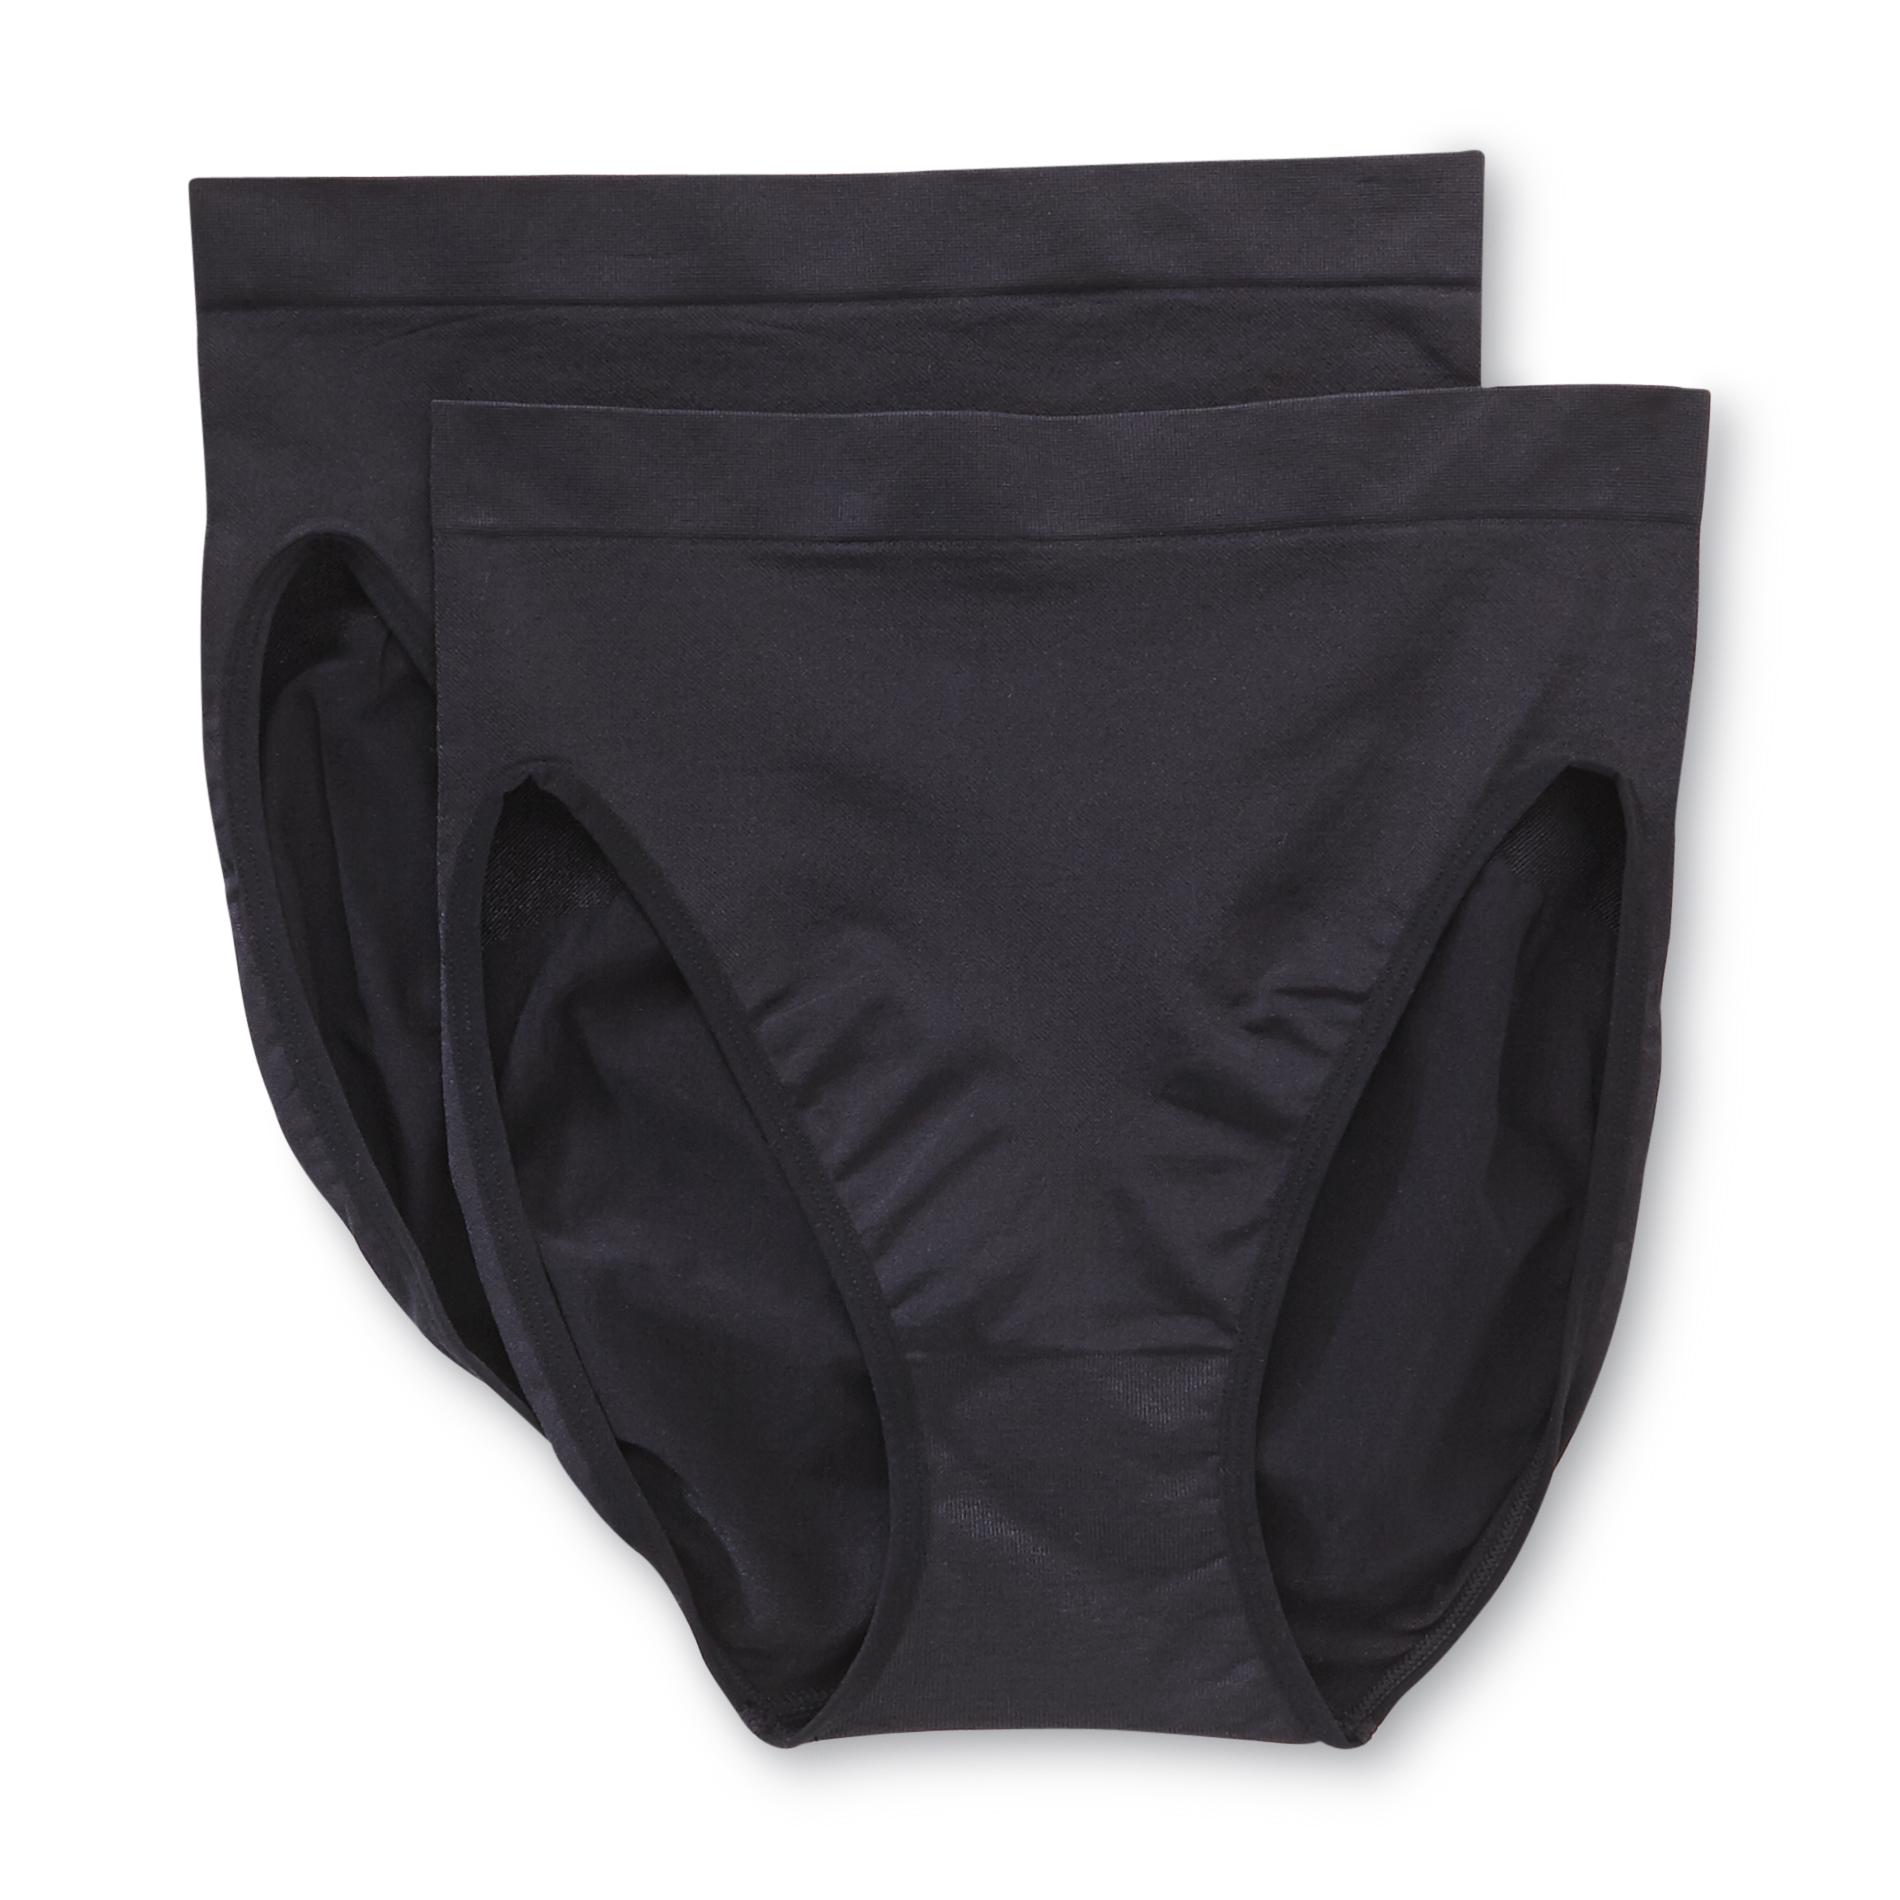 Maidenform Women's 2-Pack Everyday Control Hi-Cut Panties